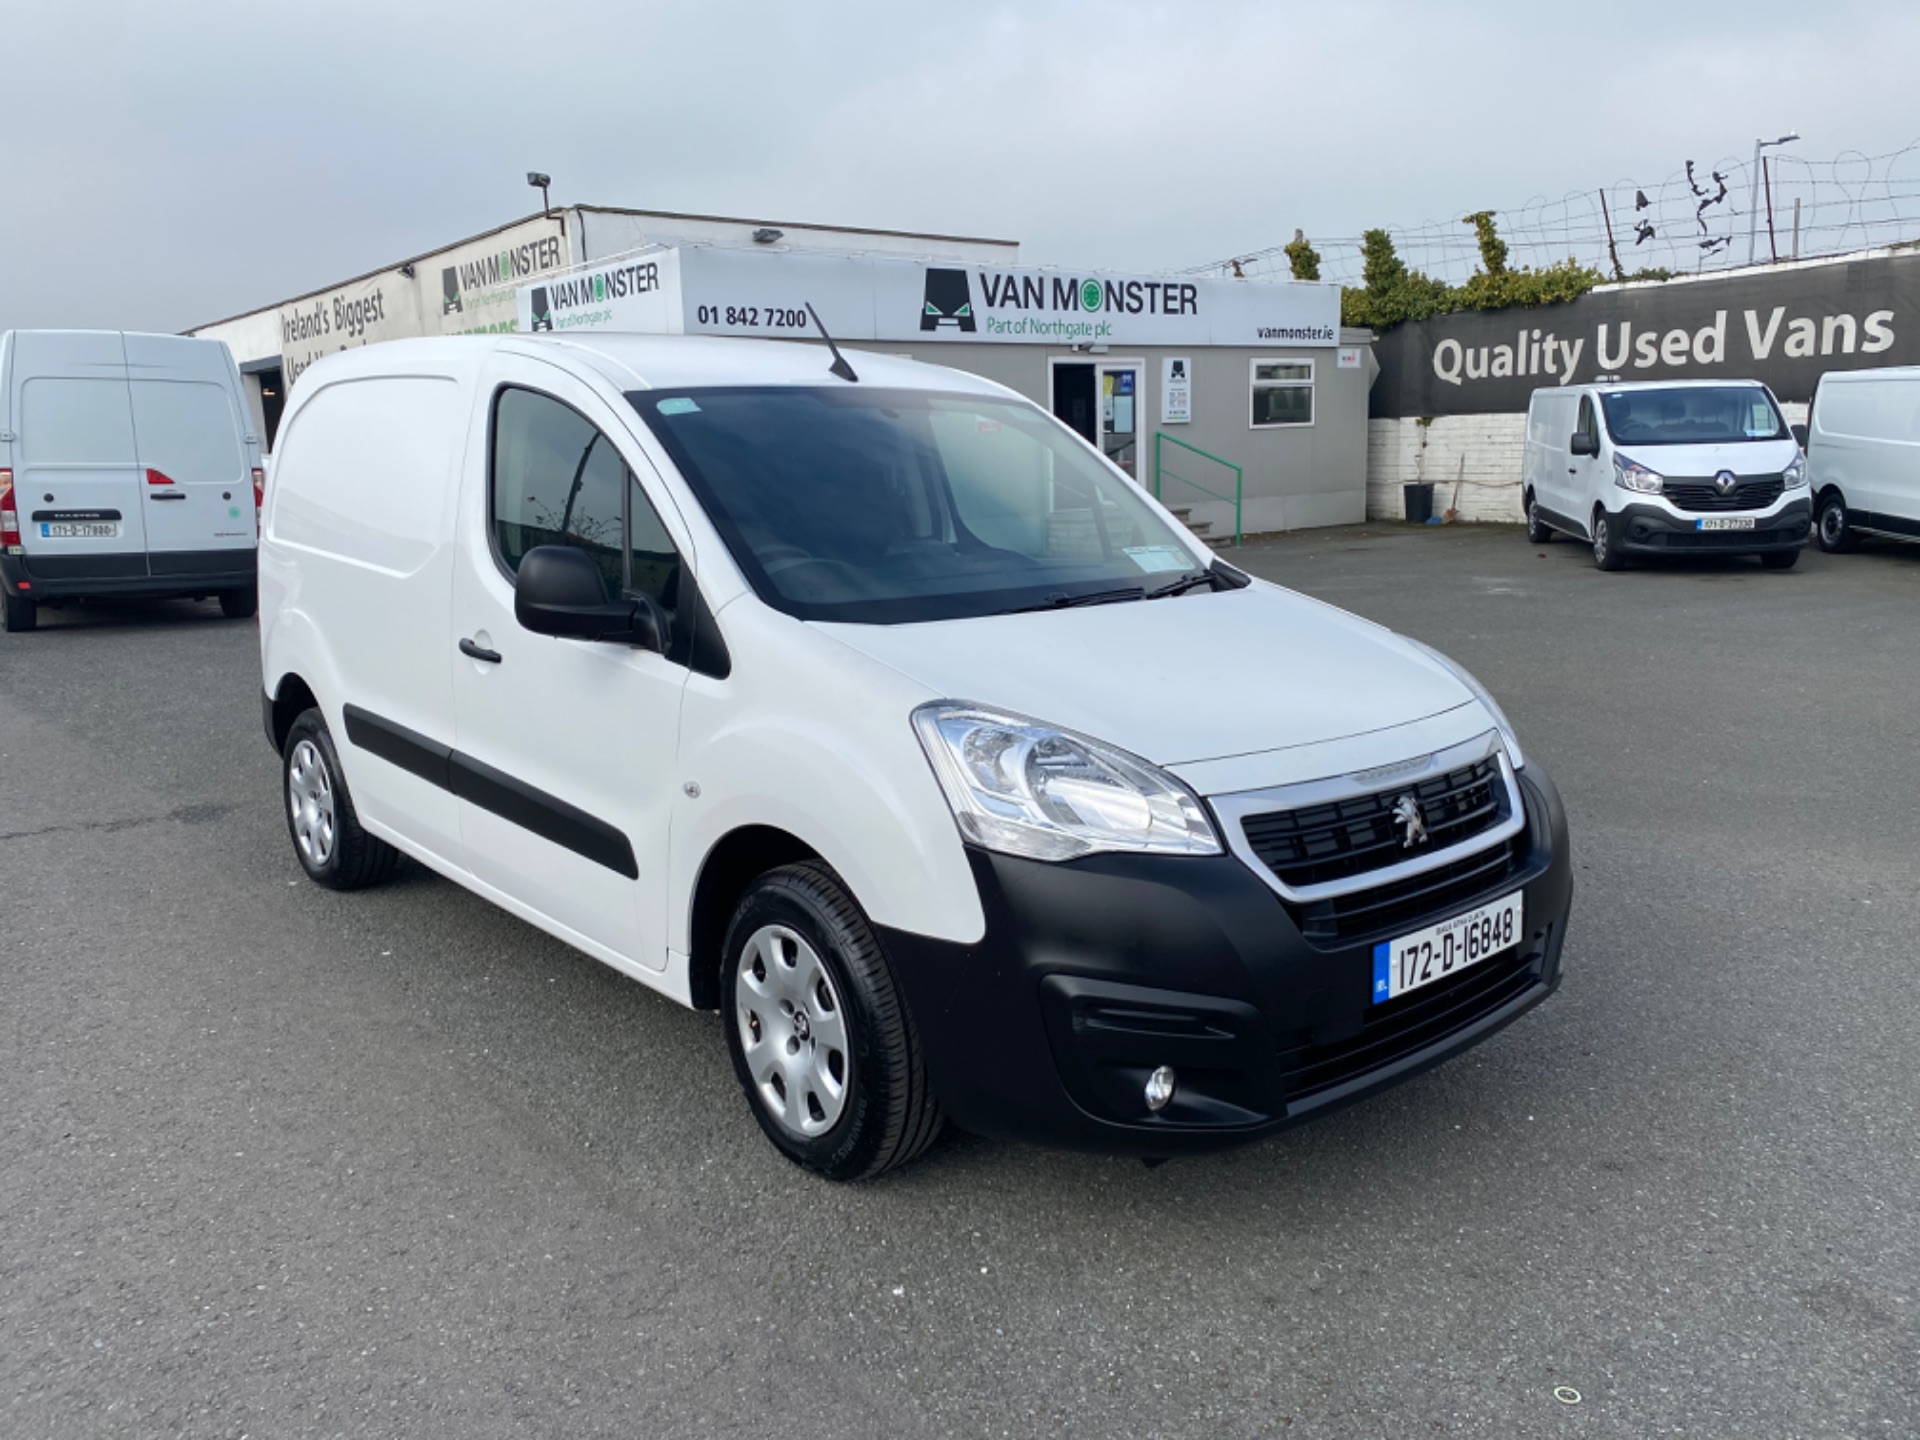 Small Peugeot Vans for Sale | Van Monster